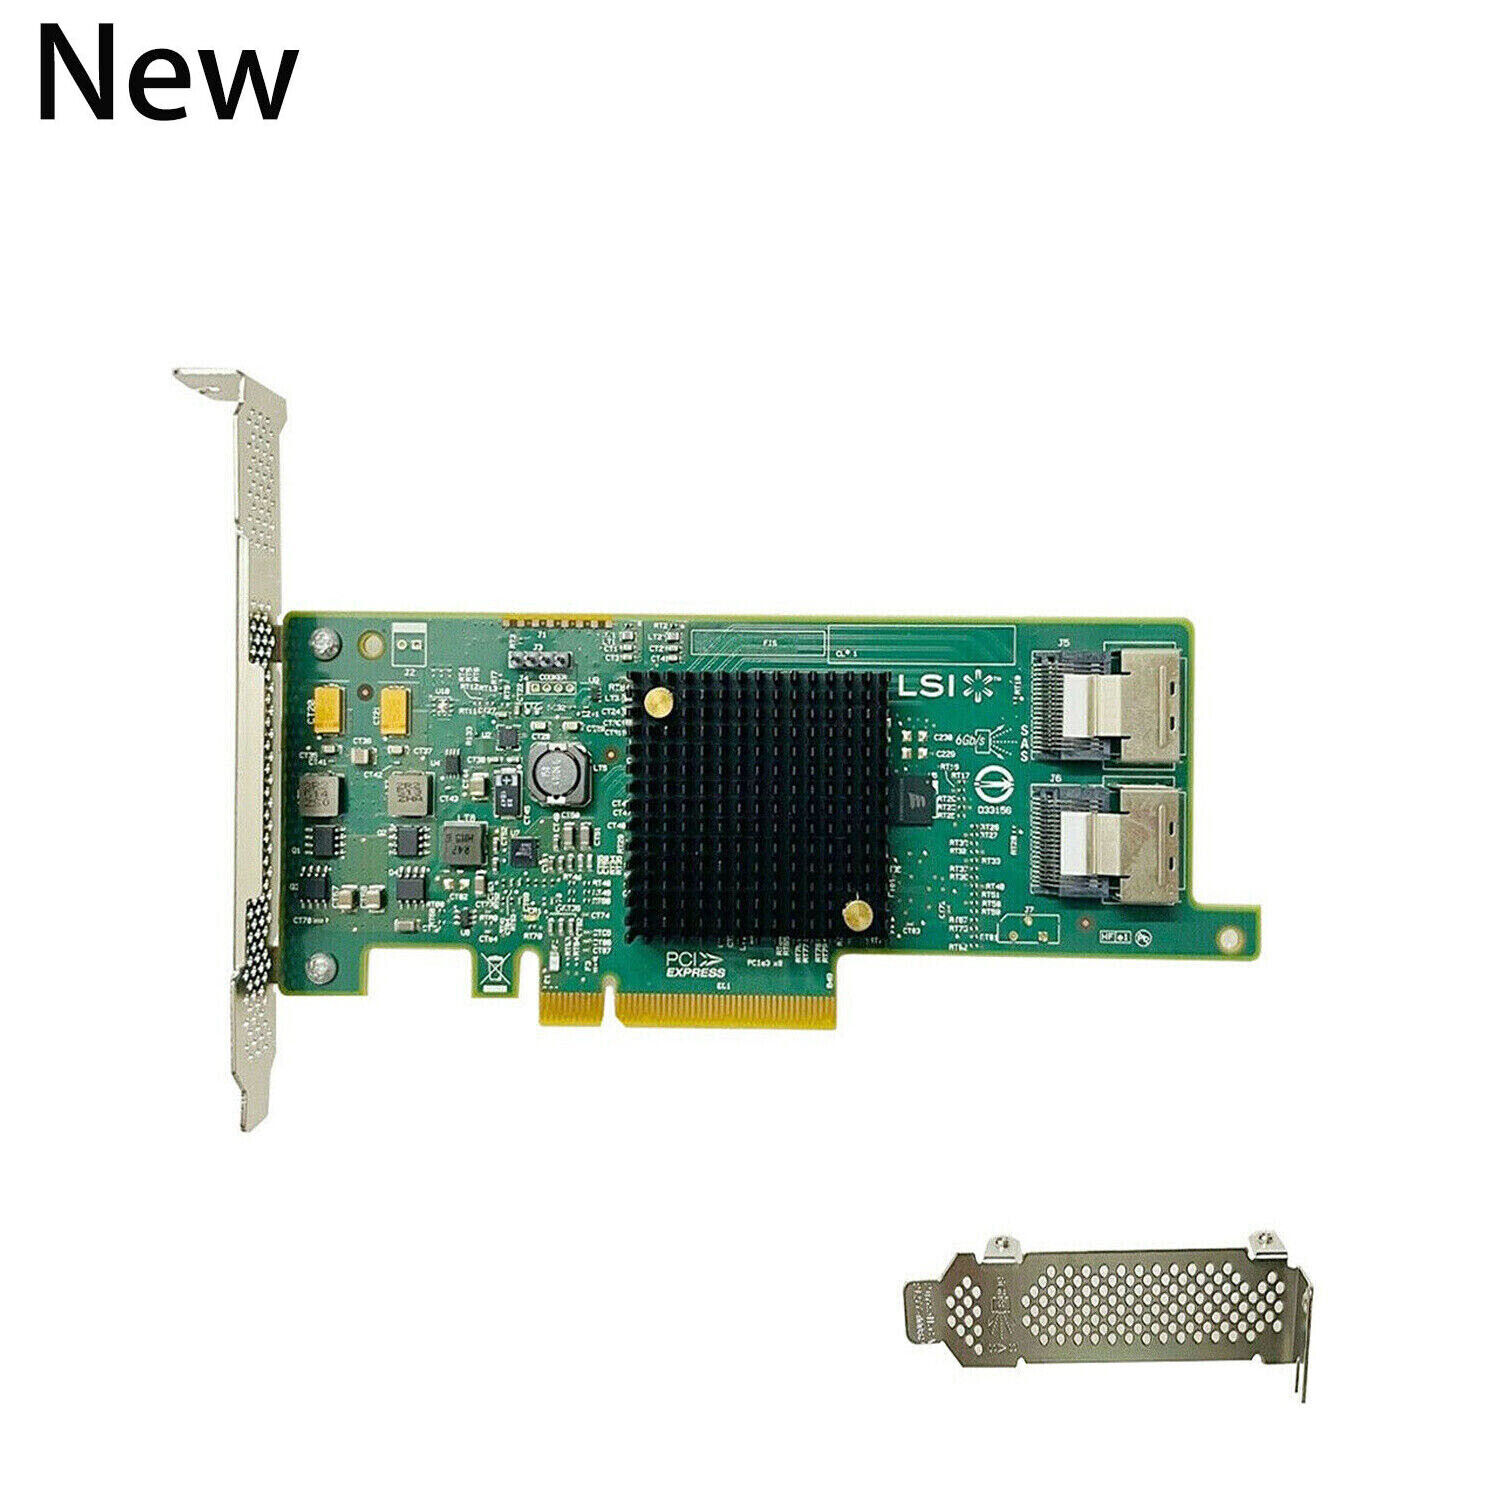 New LSI SAS 9207-8i 6Gbs PCI-E 3.0 Adapter LSI00301 2308 HBA IT Mode ZFS FreeNAS